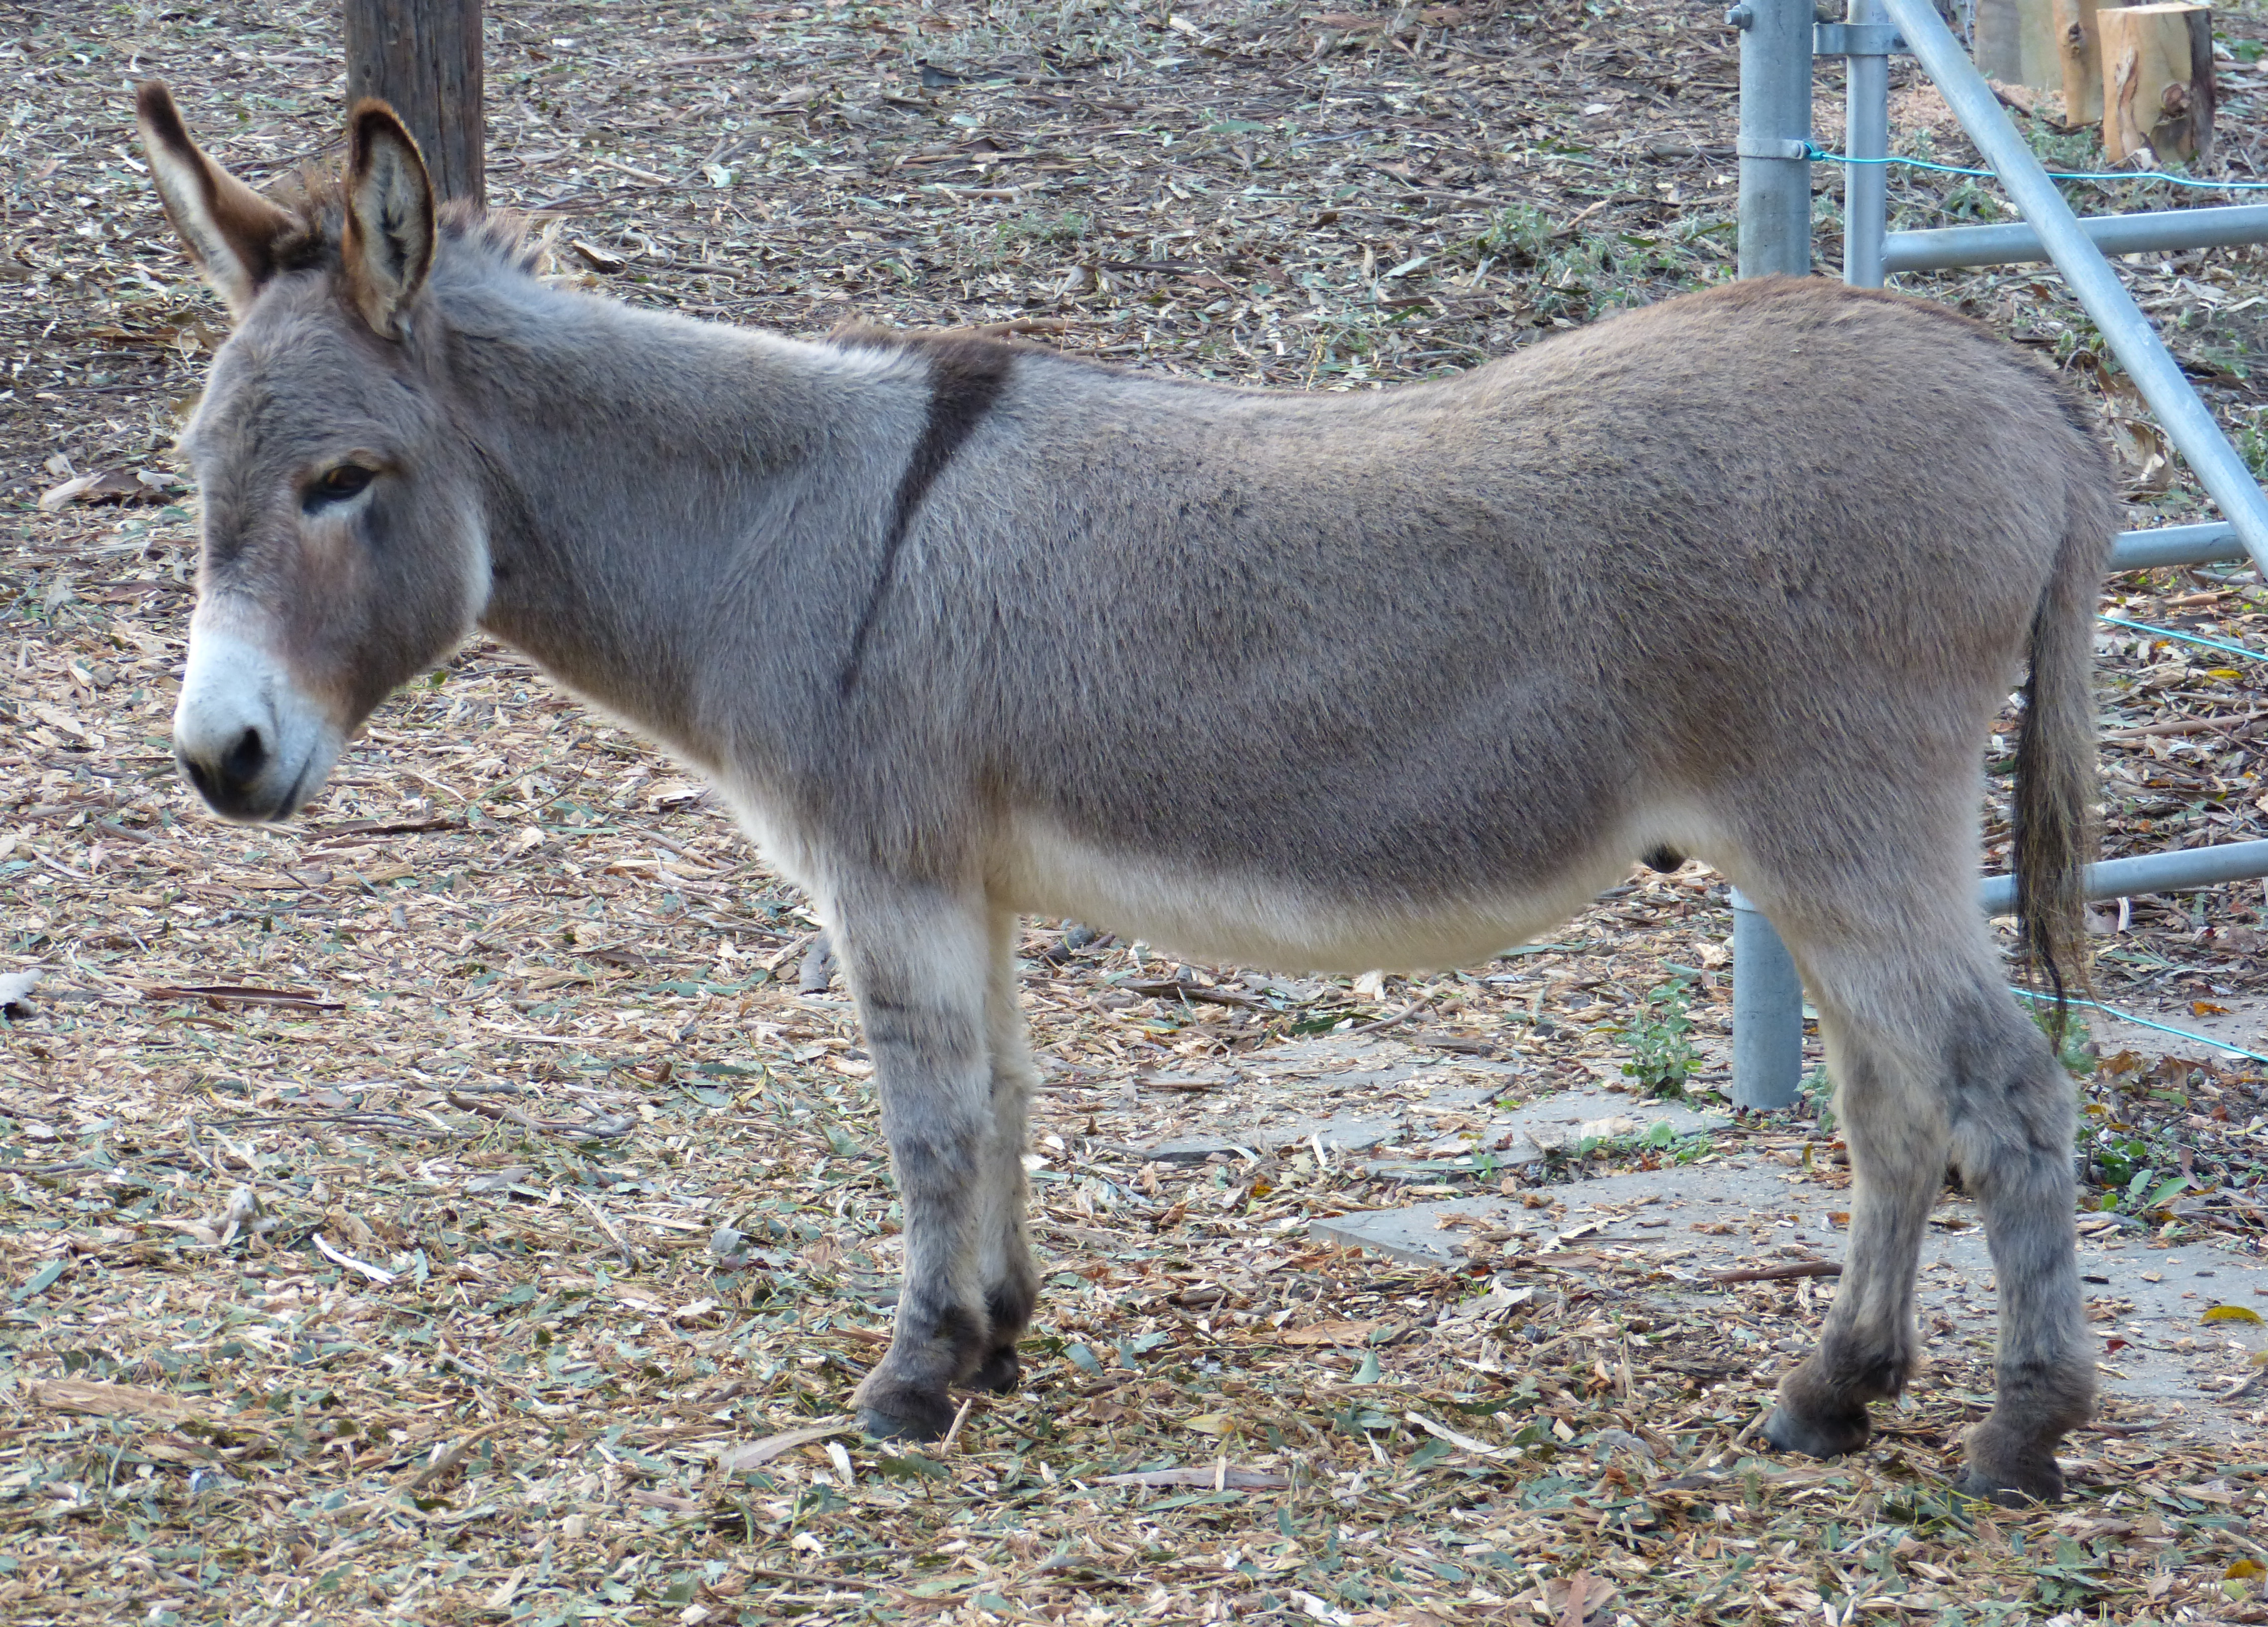 File:Perry-miniature-donkey-in-Palo-Alto-CA-2016.jpg - Wikimedia Commons